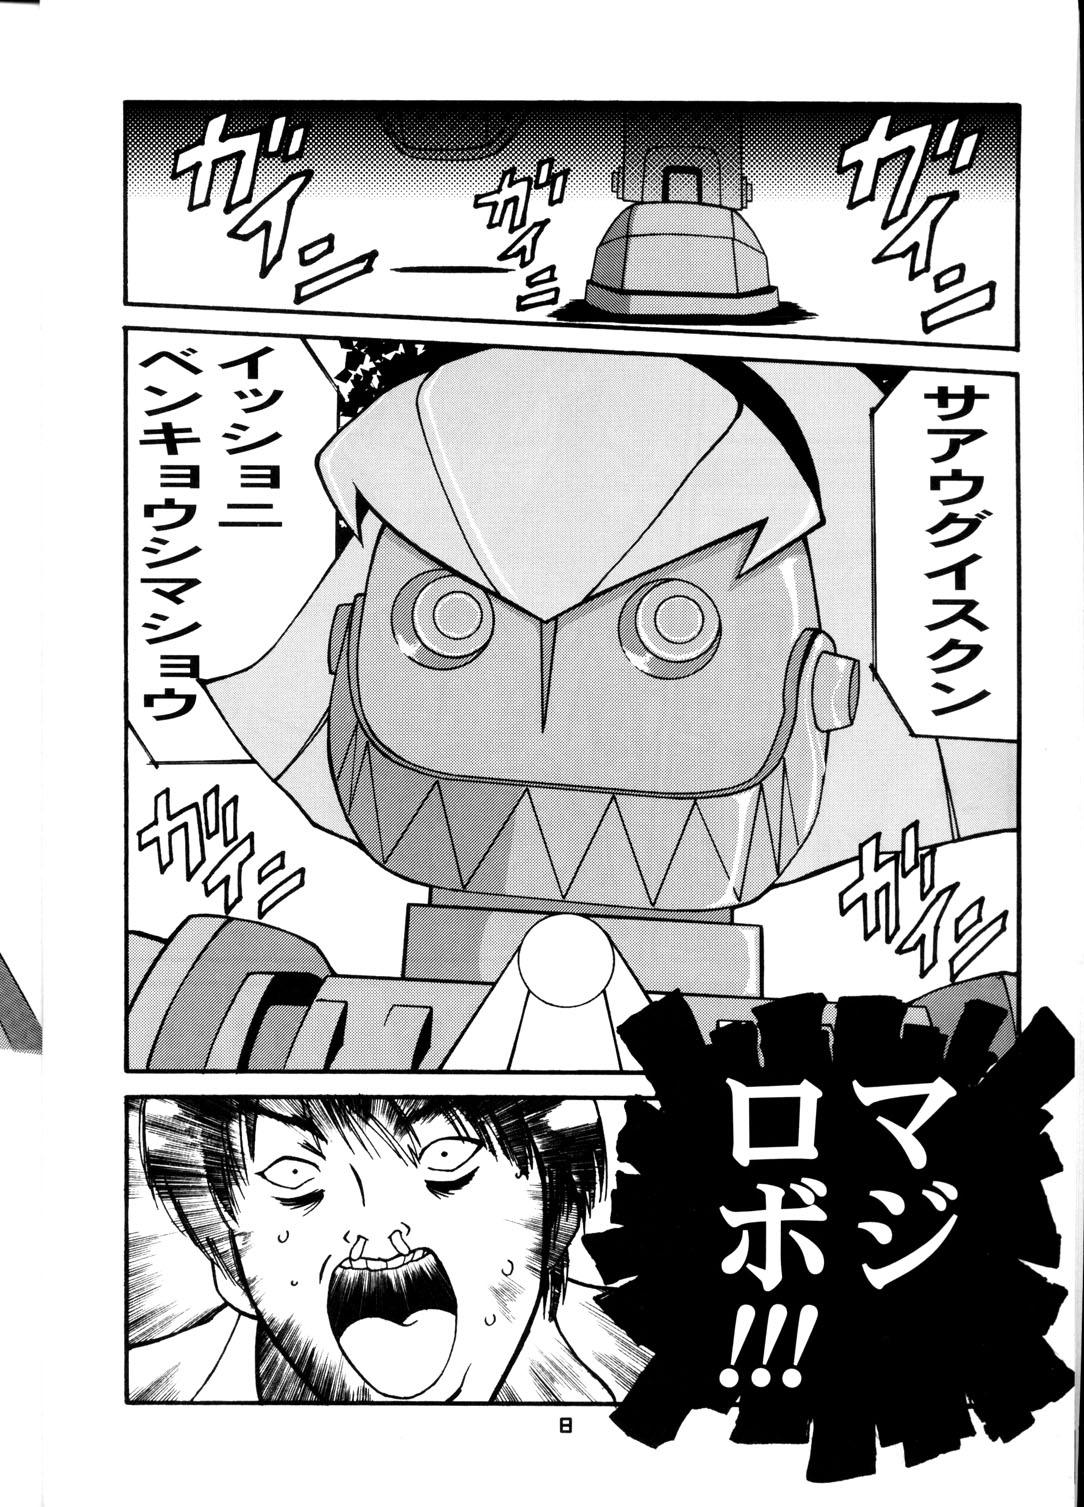 Squirt Oh! Robomusume Chuu Shuugou! - Cutey honey The big o Space adventure cobra Megazone 23 Moero robocon Rainbow sentai robin Stepbro - Page 8